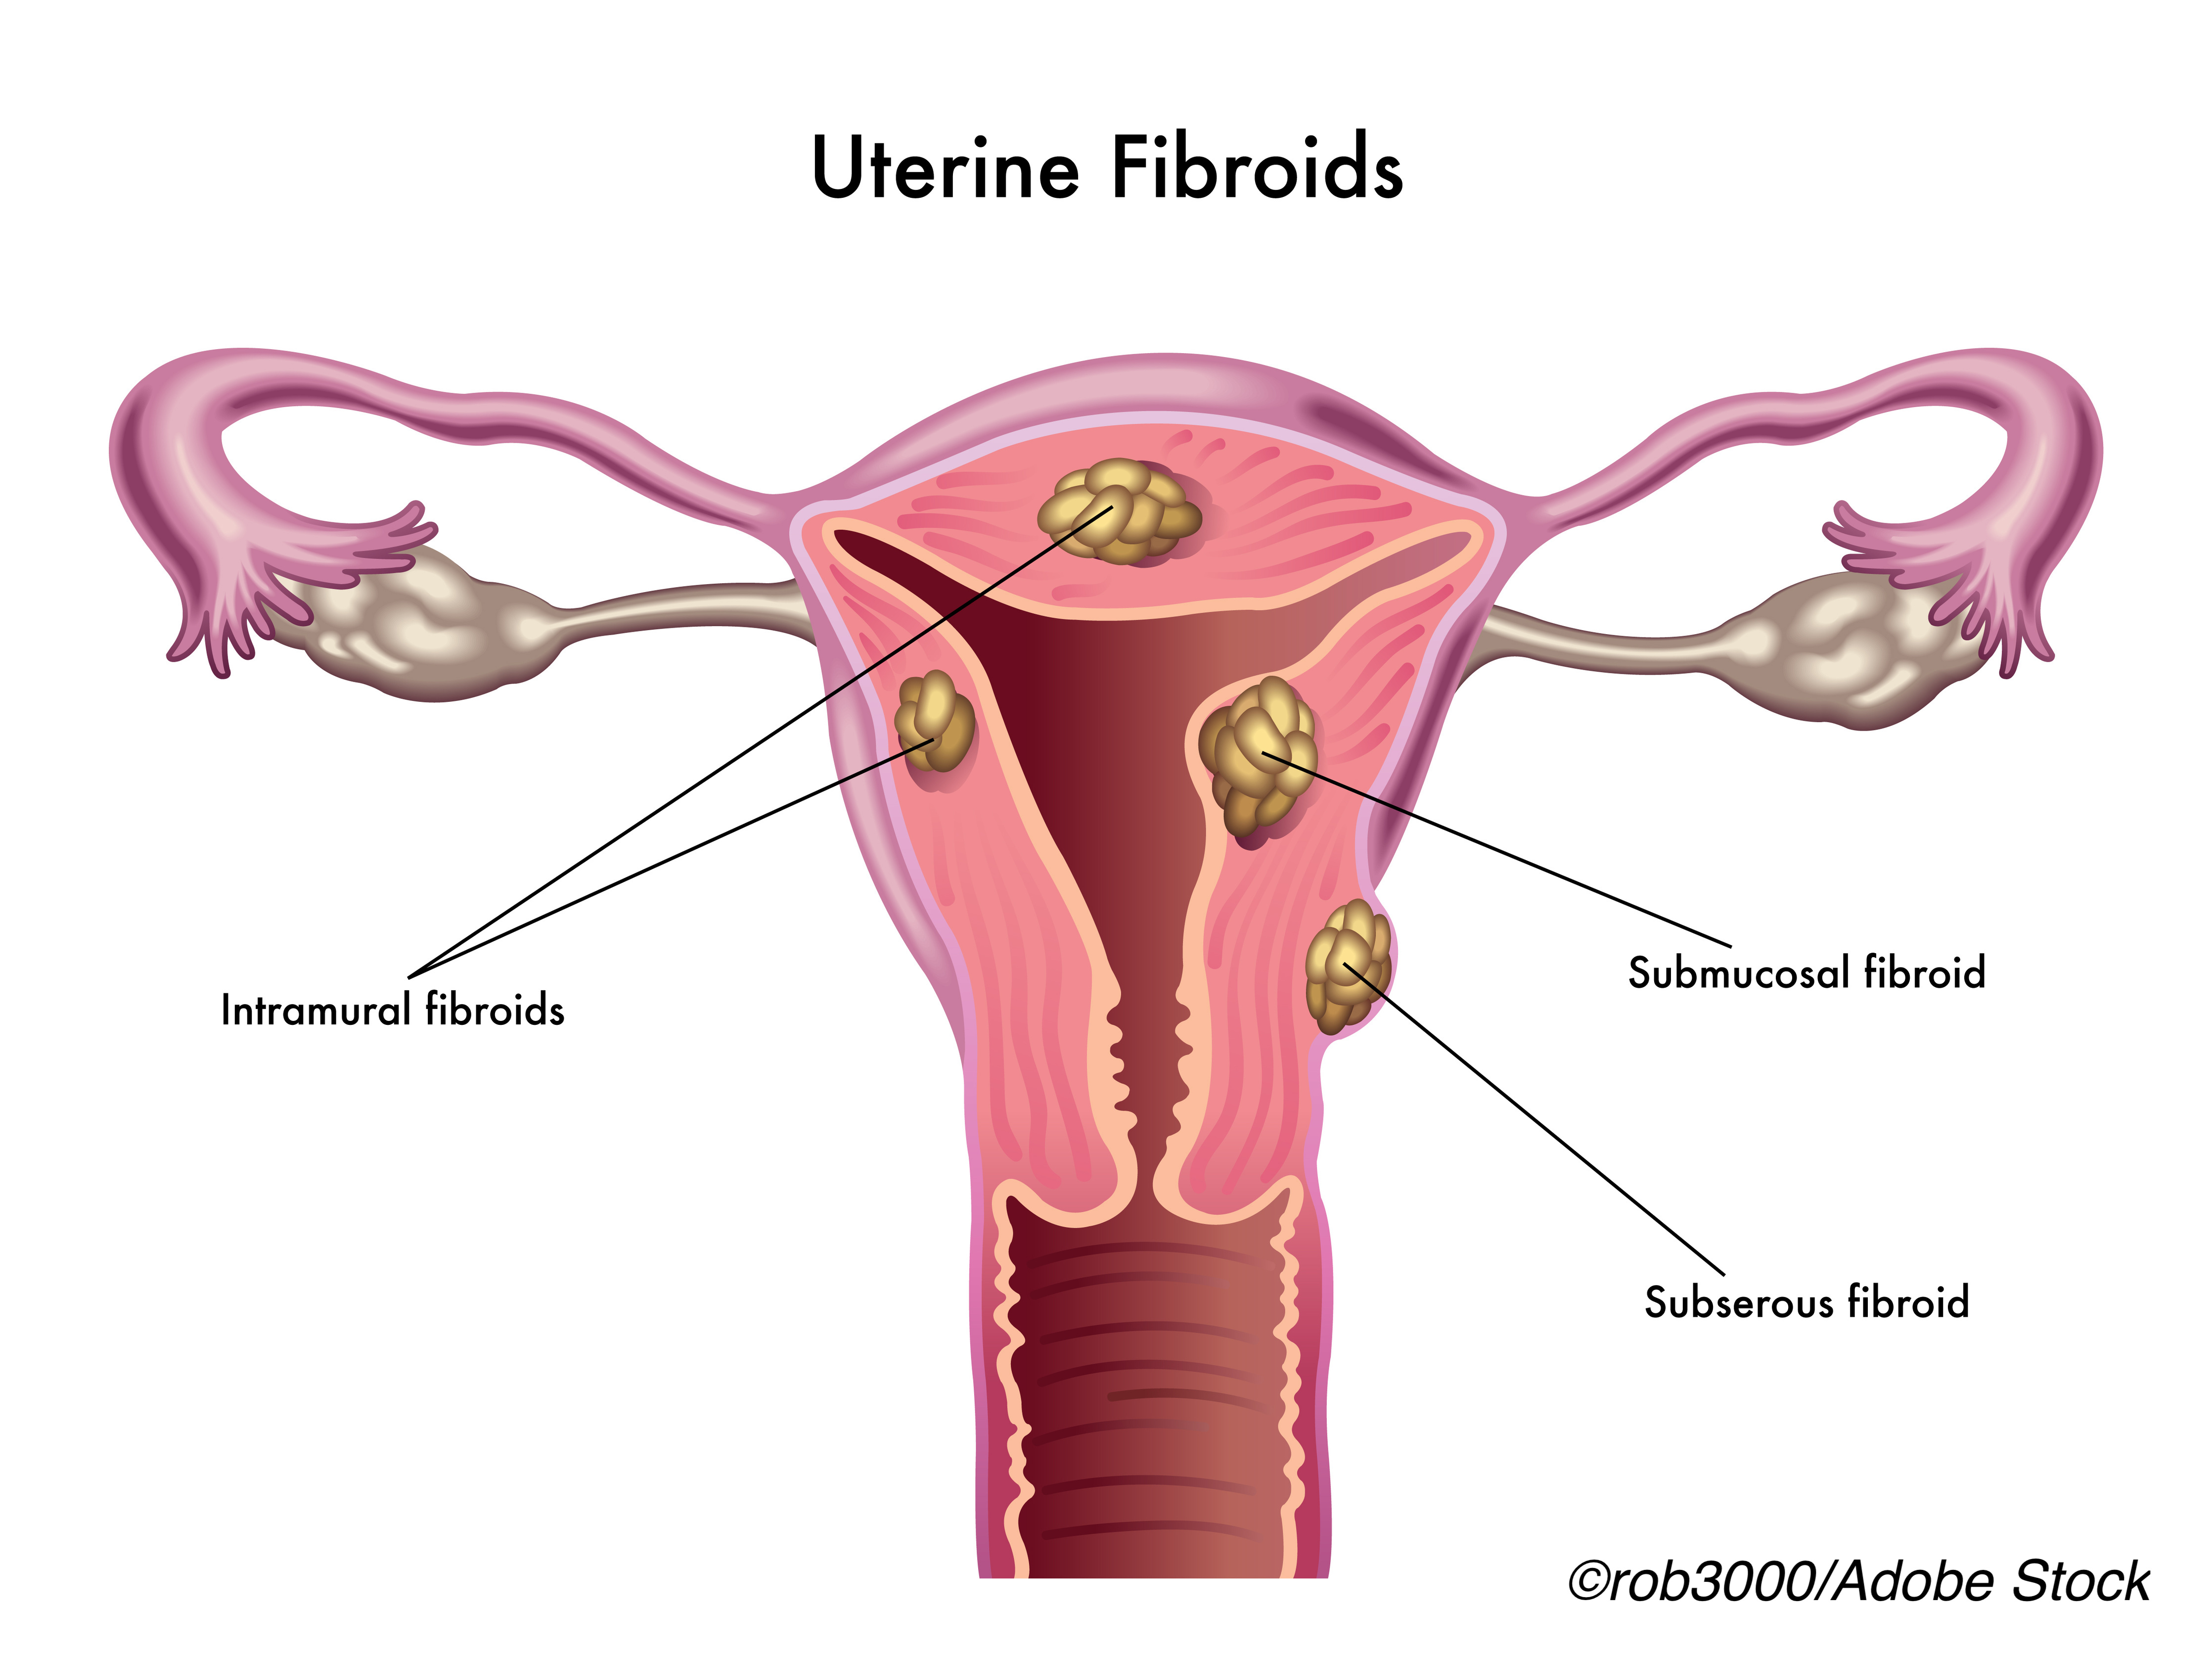 High Ozone Exposure May Increase Uterine Fibroid Risk in Black Women